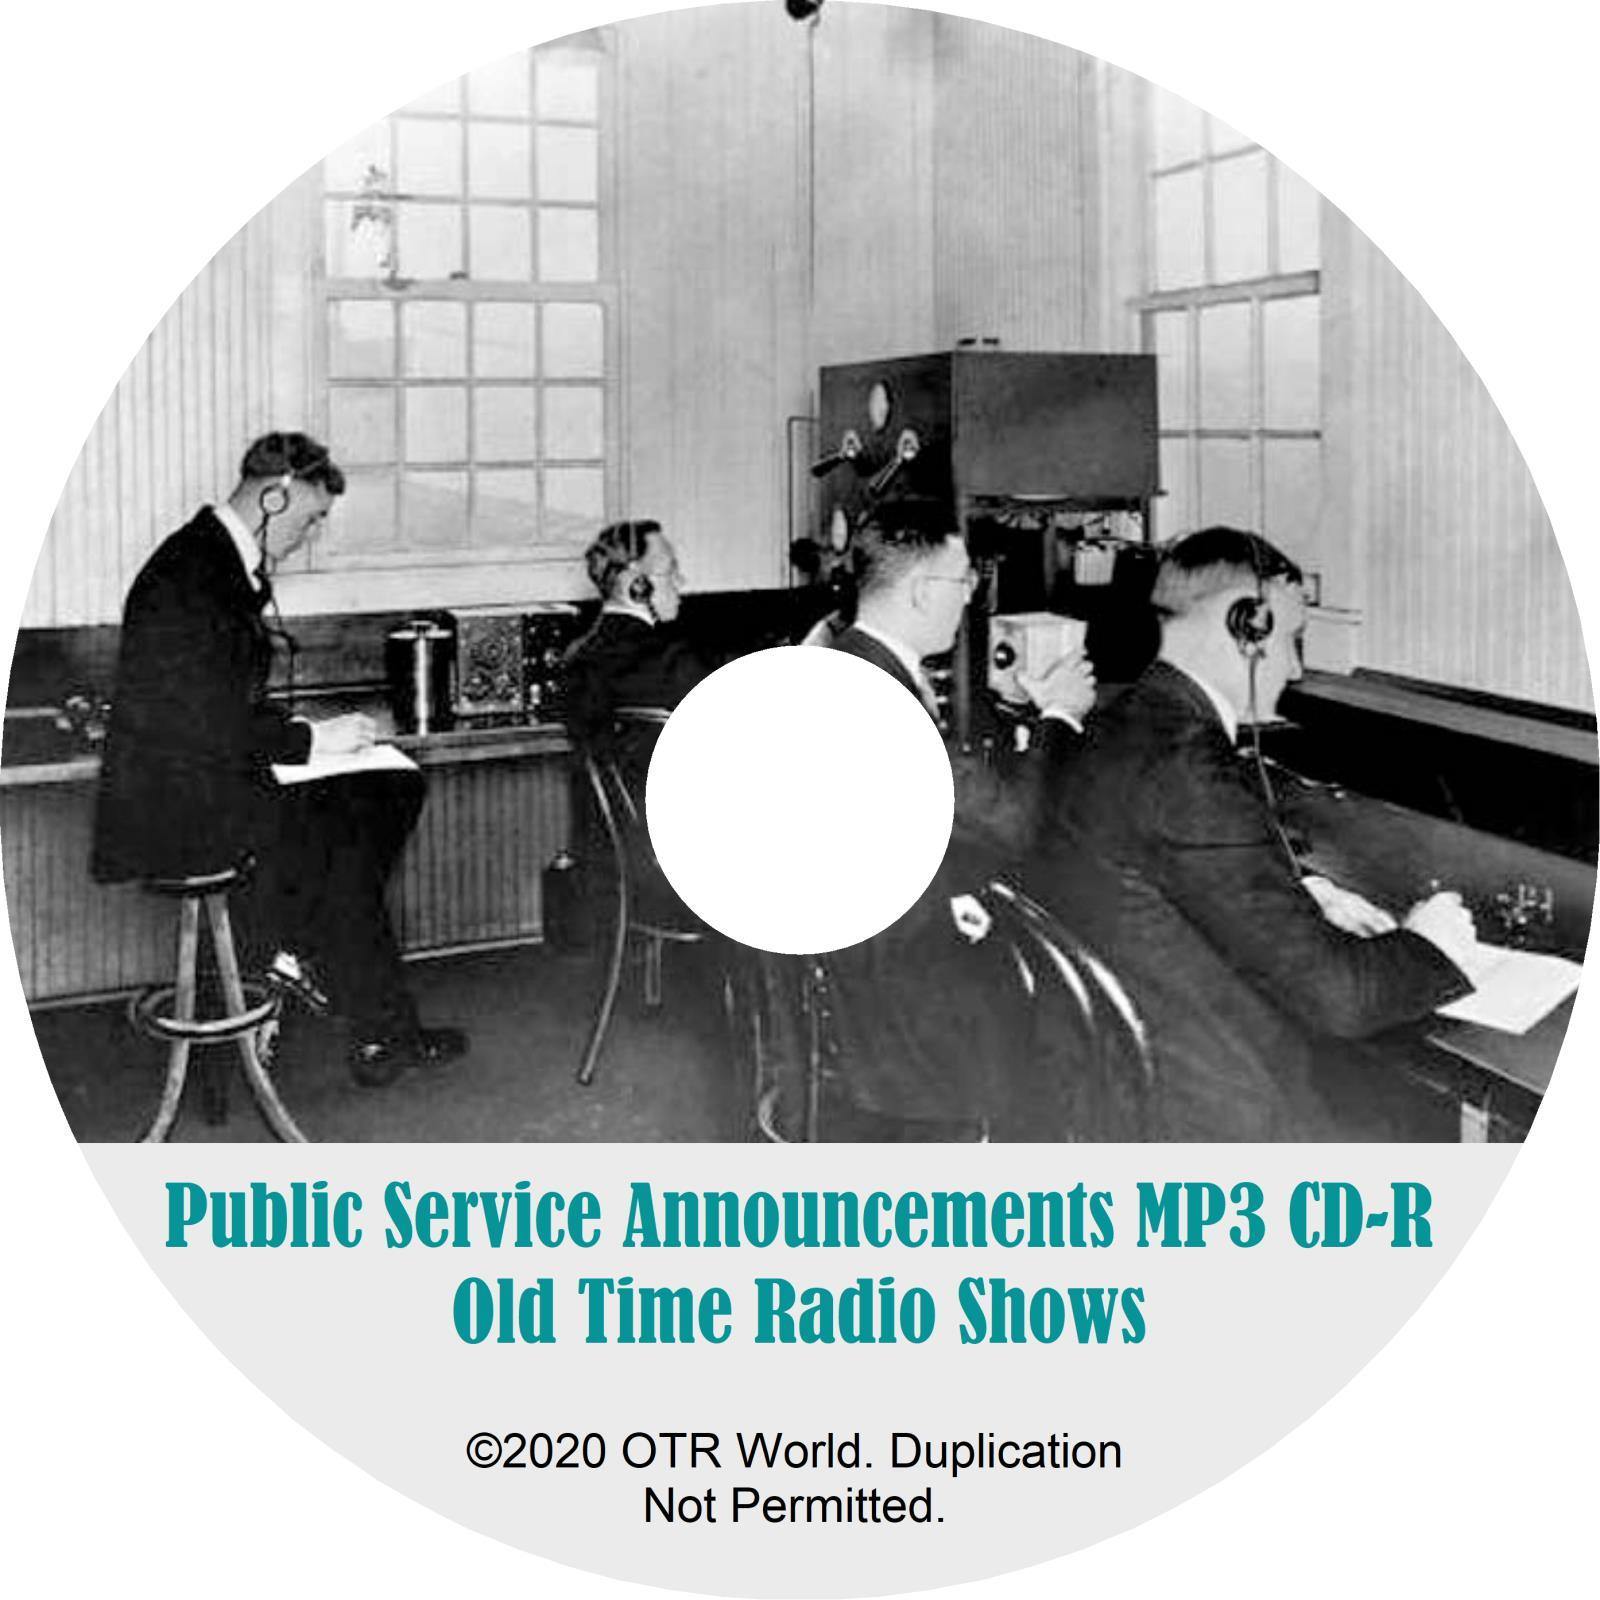 Public Service Announcements OTR Old Time Radio Shows MP3 On CD-R 23 Episodes - OTR World